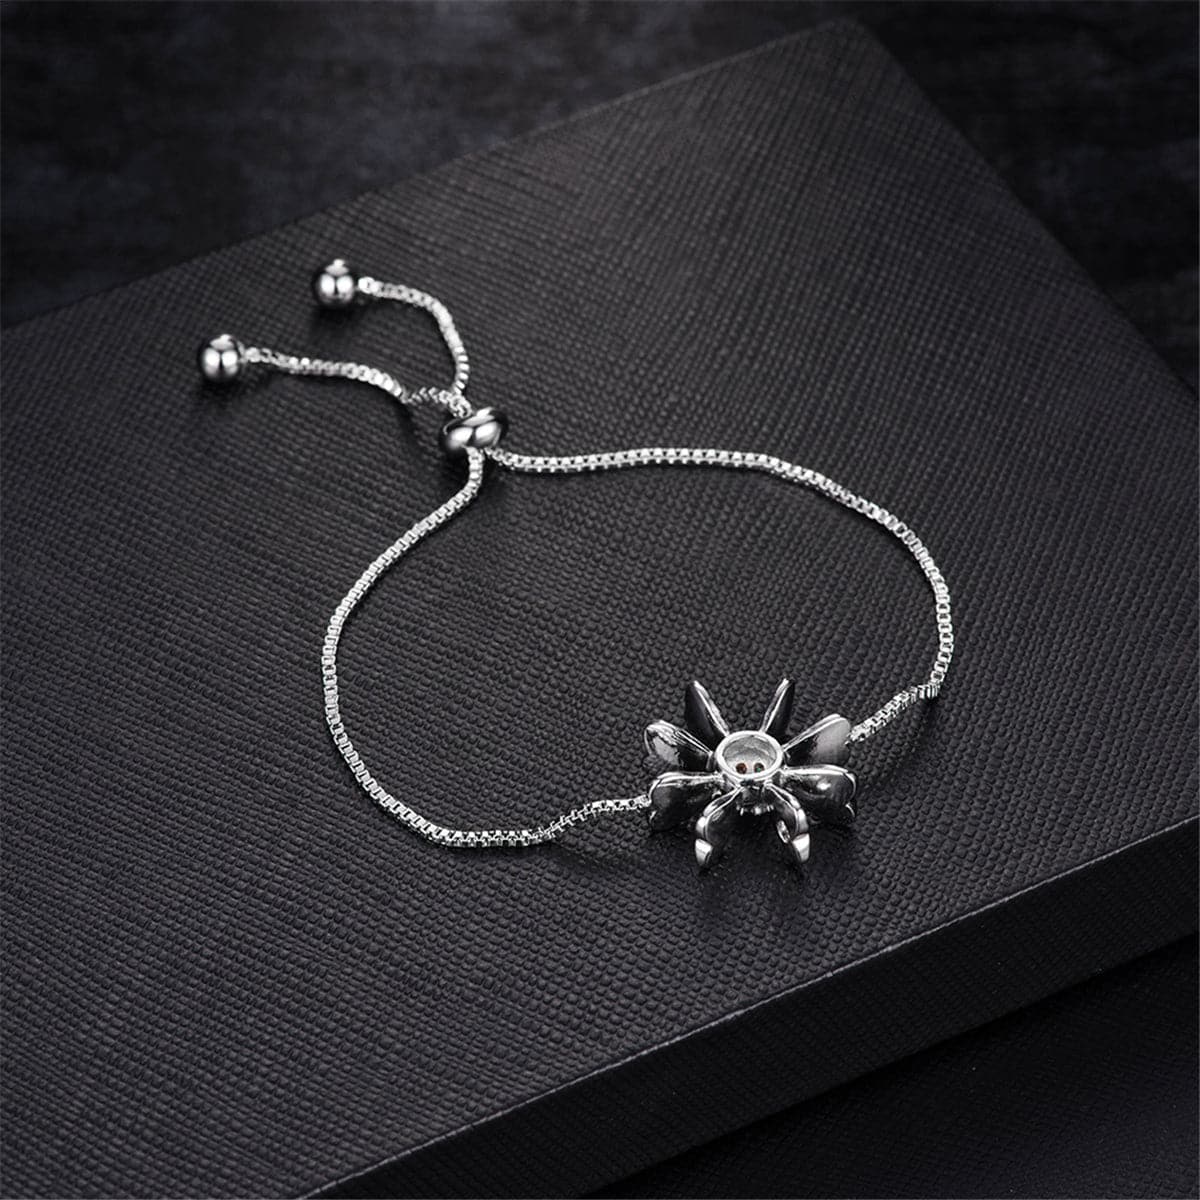 Cubic Zirconia & Silver-Plated Flower Adjustable Charm Bracelet